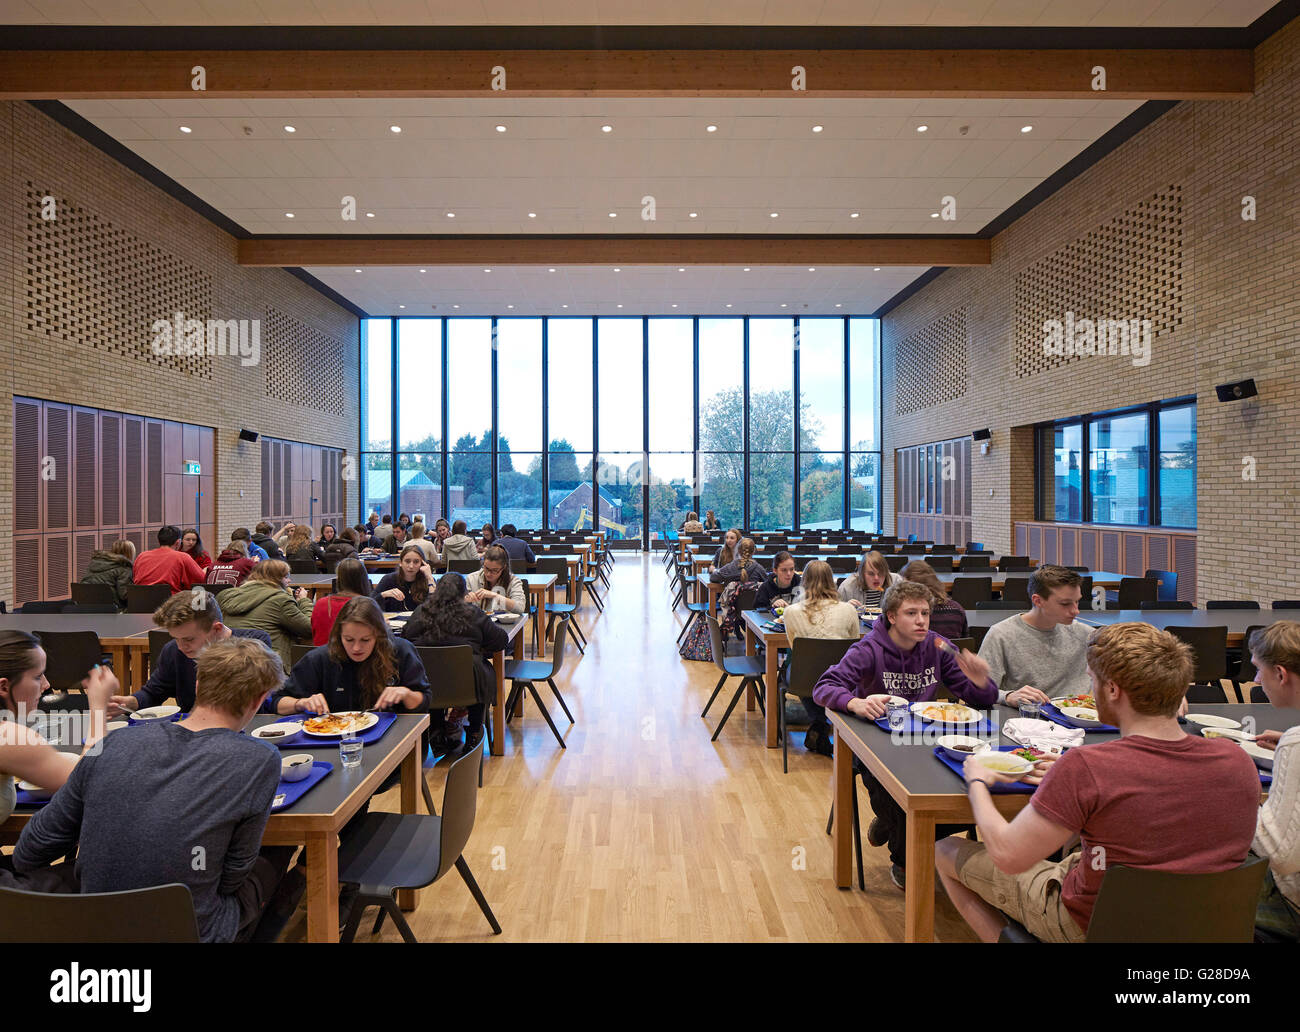 Dining hall during lunch. The Barn, Sutton Bonington Campus, Nottingham, United Kingdom. Architect: Make Ltd, 2015. Stock Photo